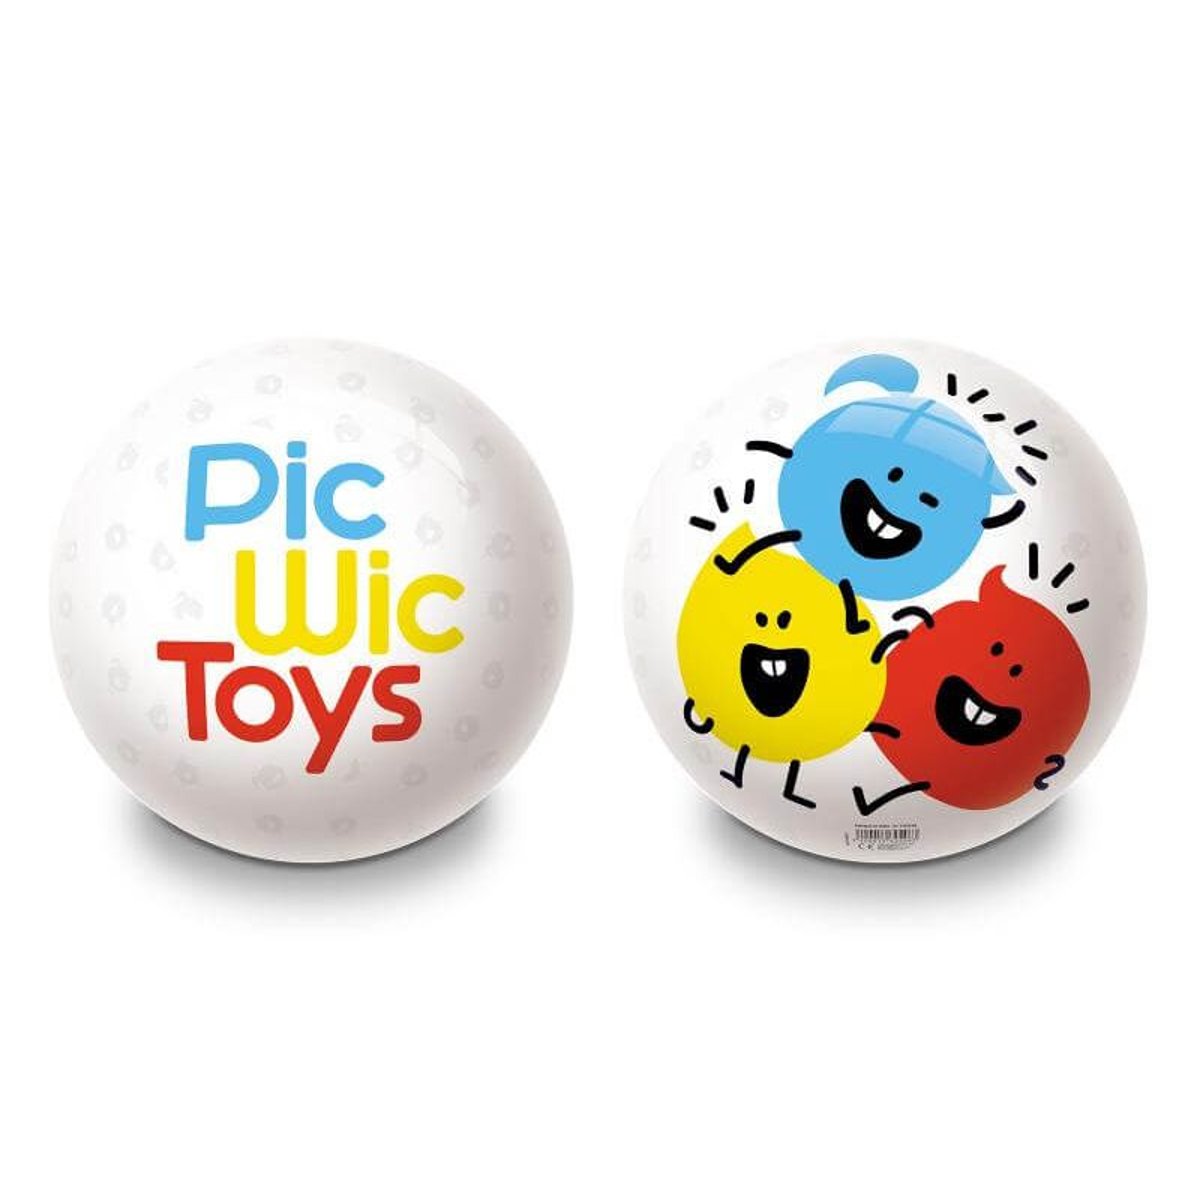 Ballon PicWicToys - Toys blanc